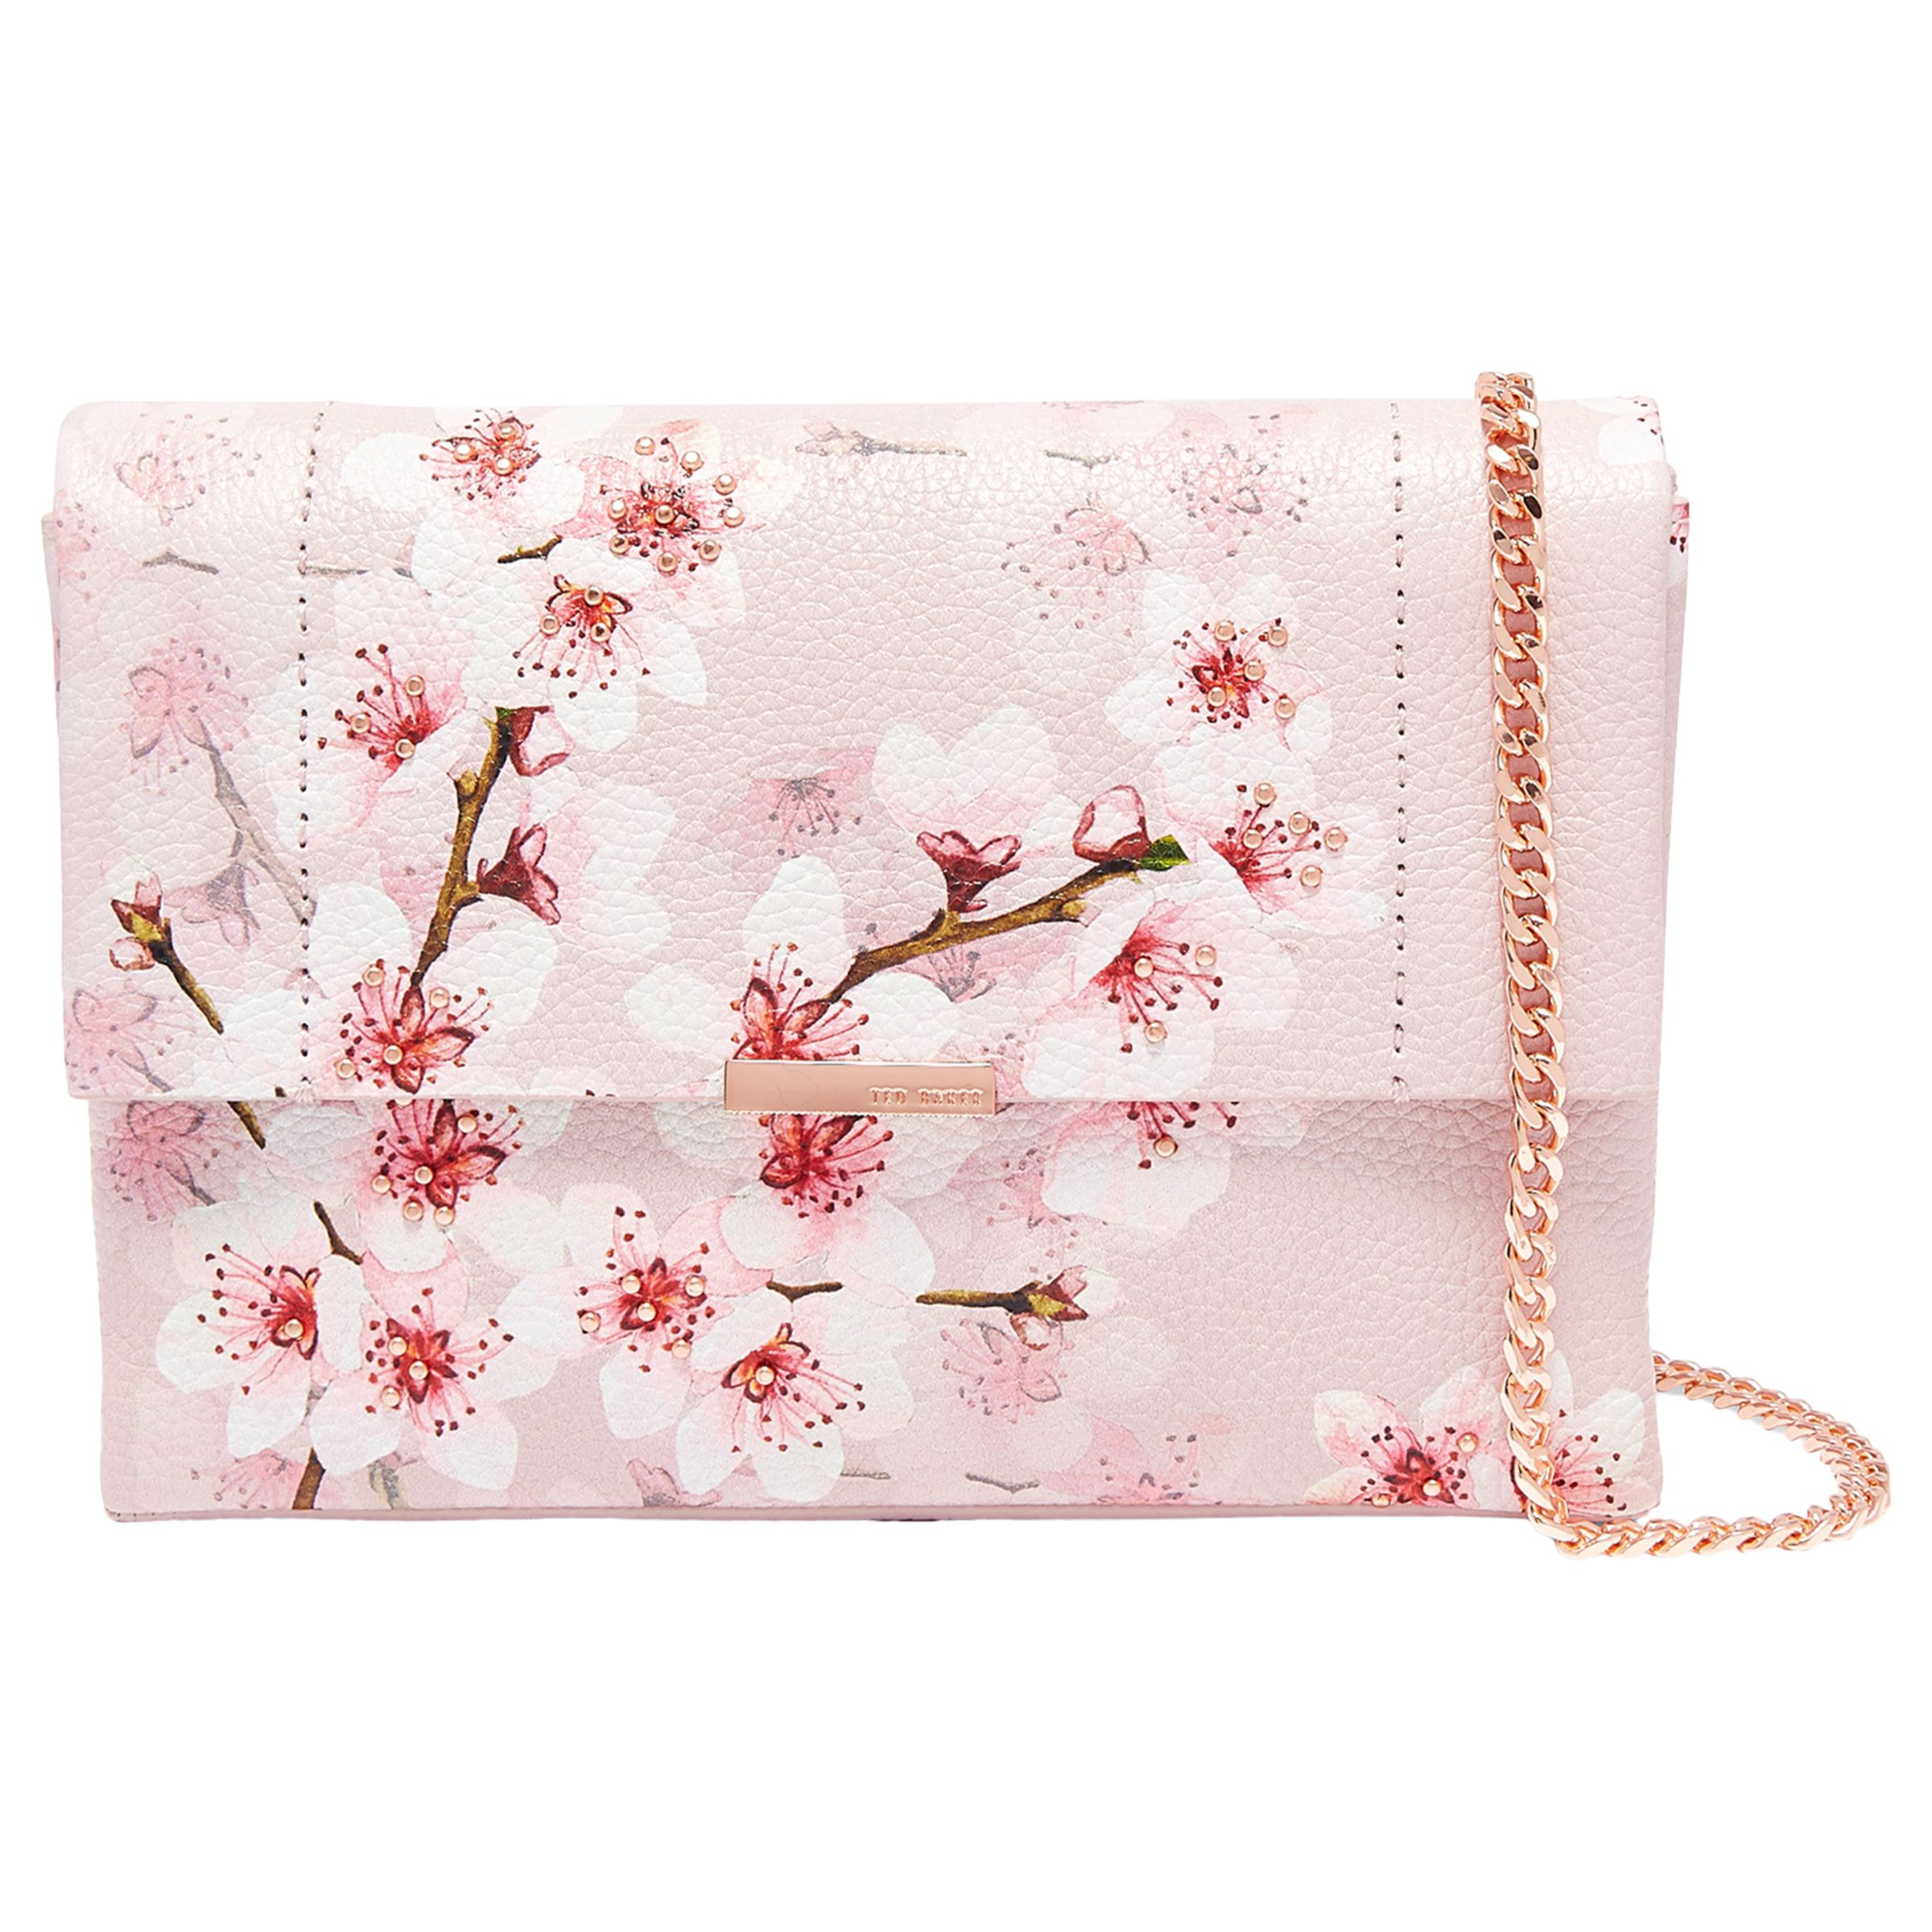 Cherry Blossom Crossbody Leather Bag Pink Flowers Purse 